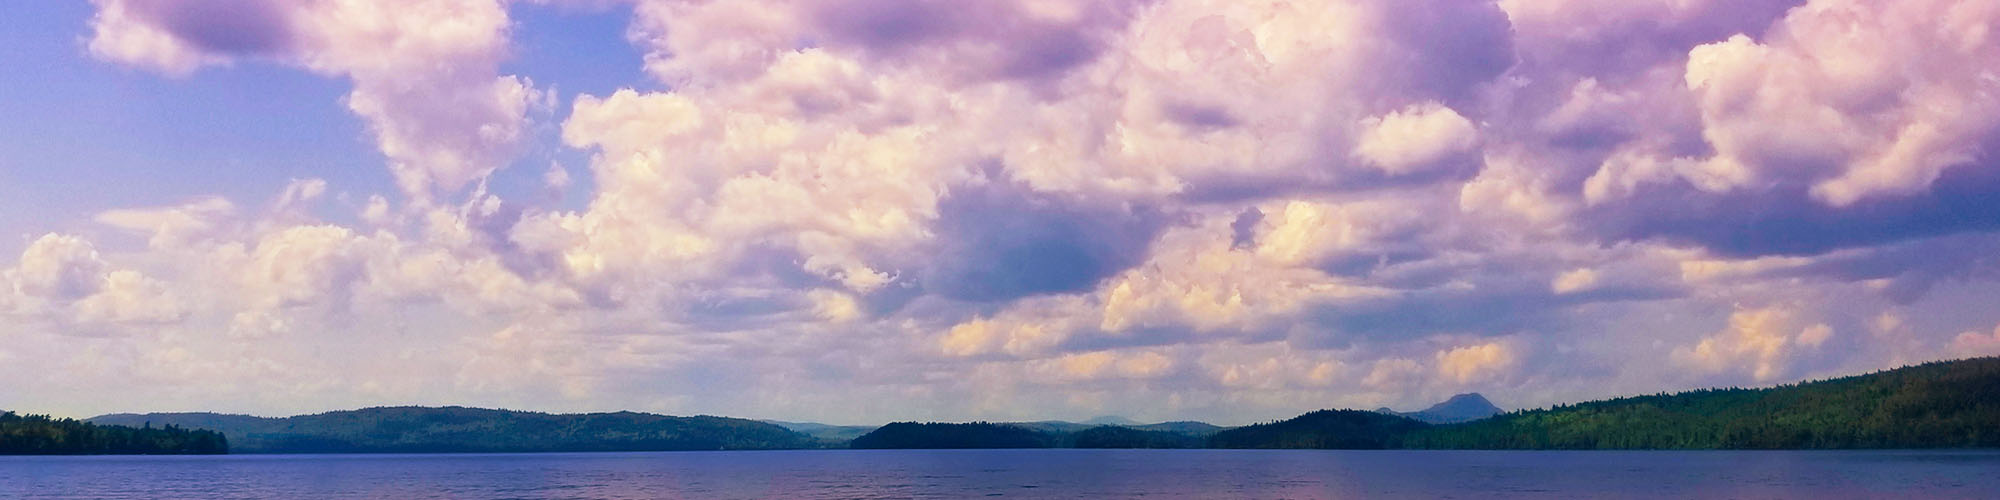 Clouds over Sebec Lake